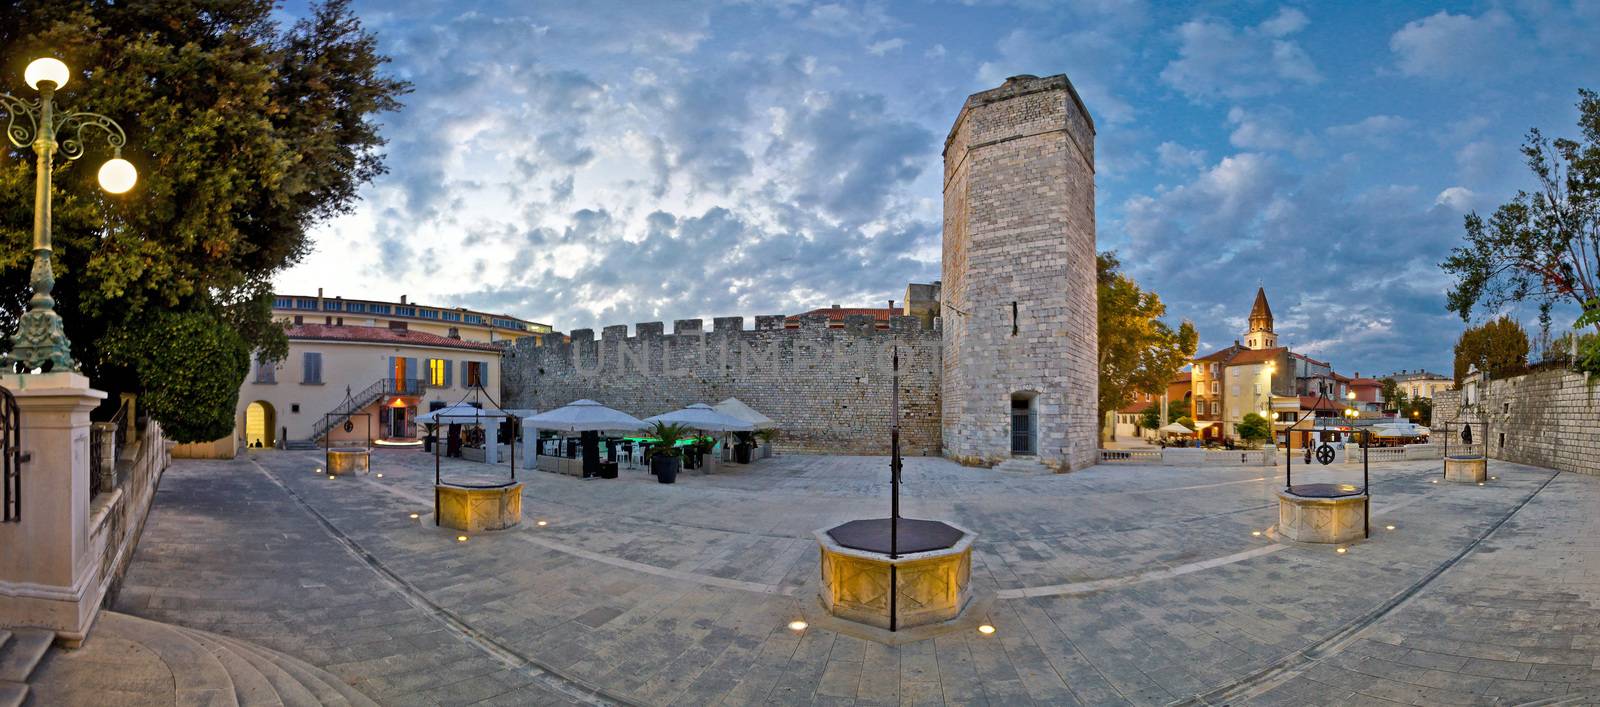 Town of Zadar five wells square evening panoramic view, Dalmatia, croatia